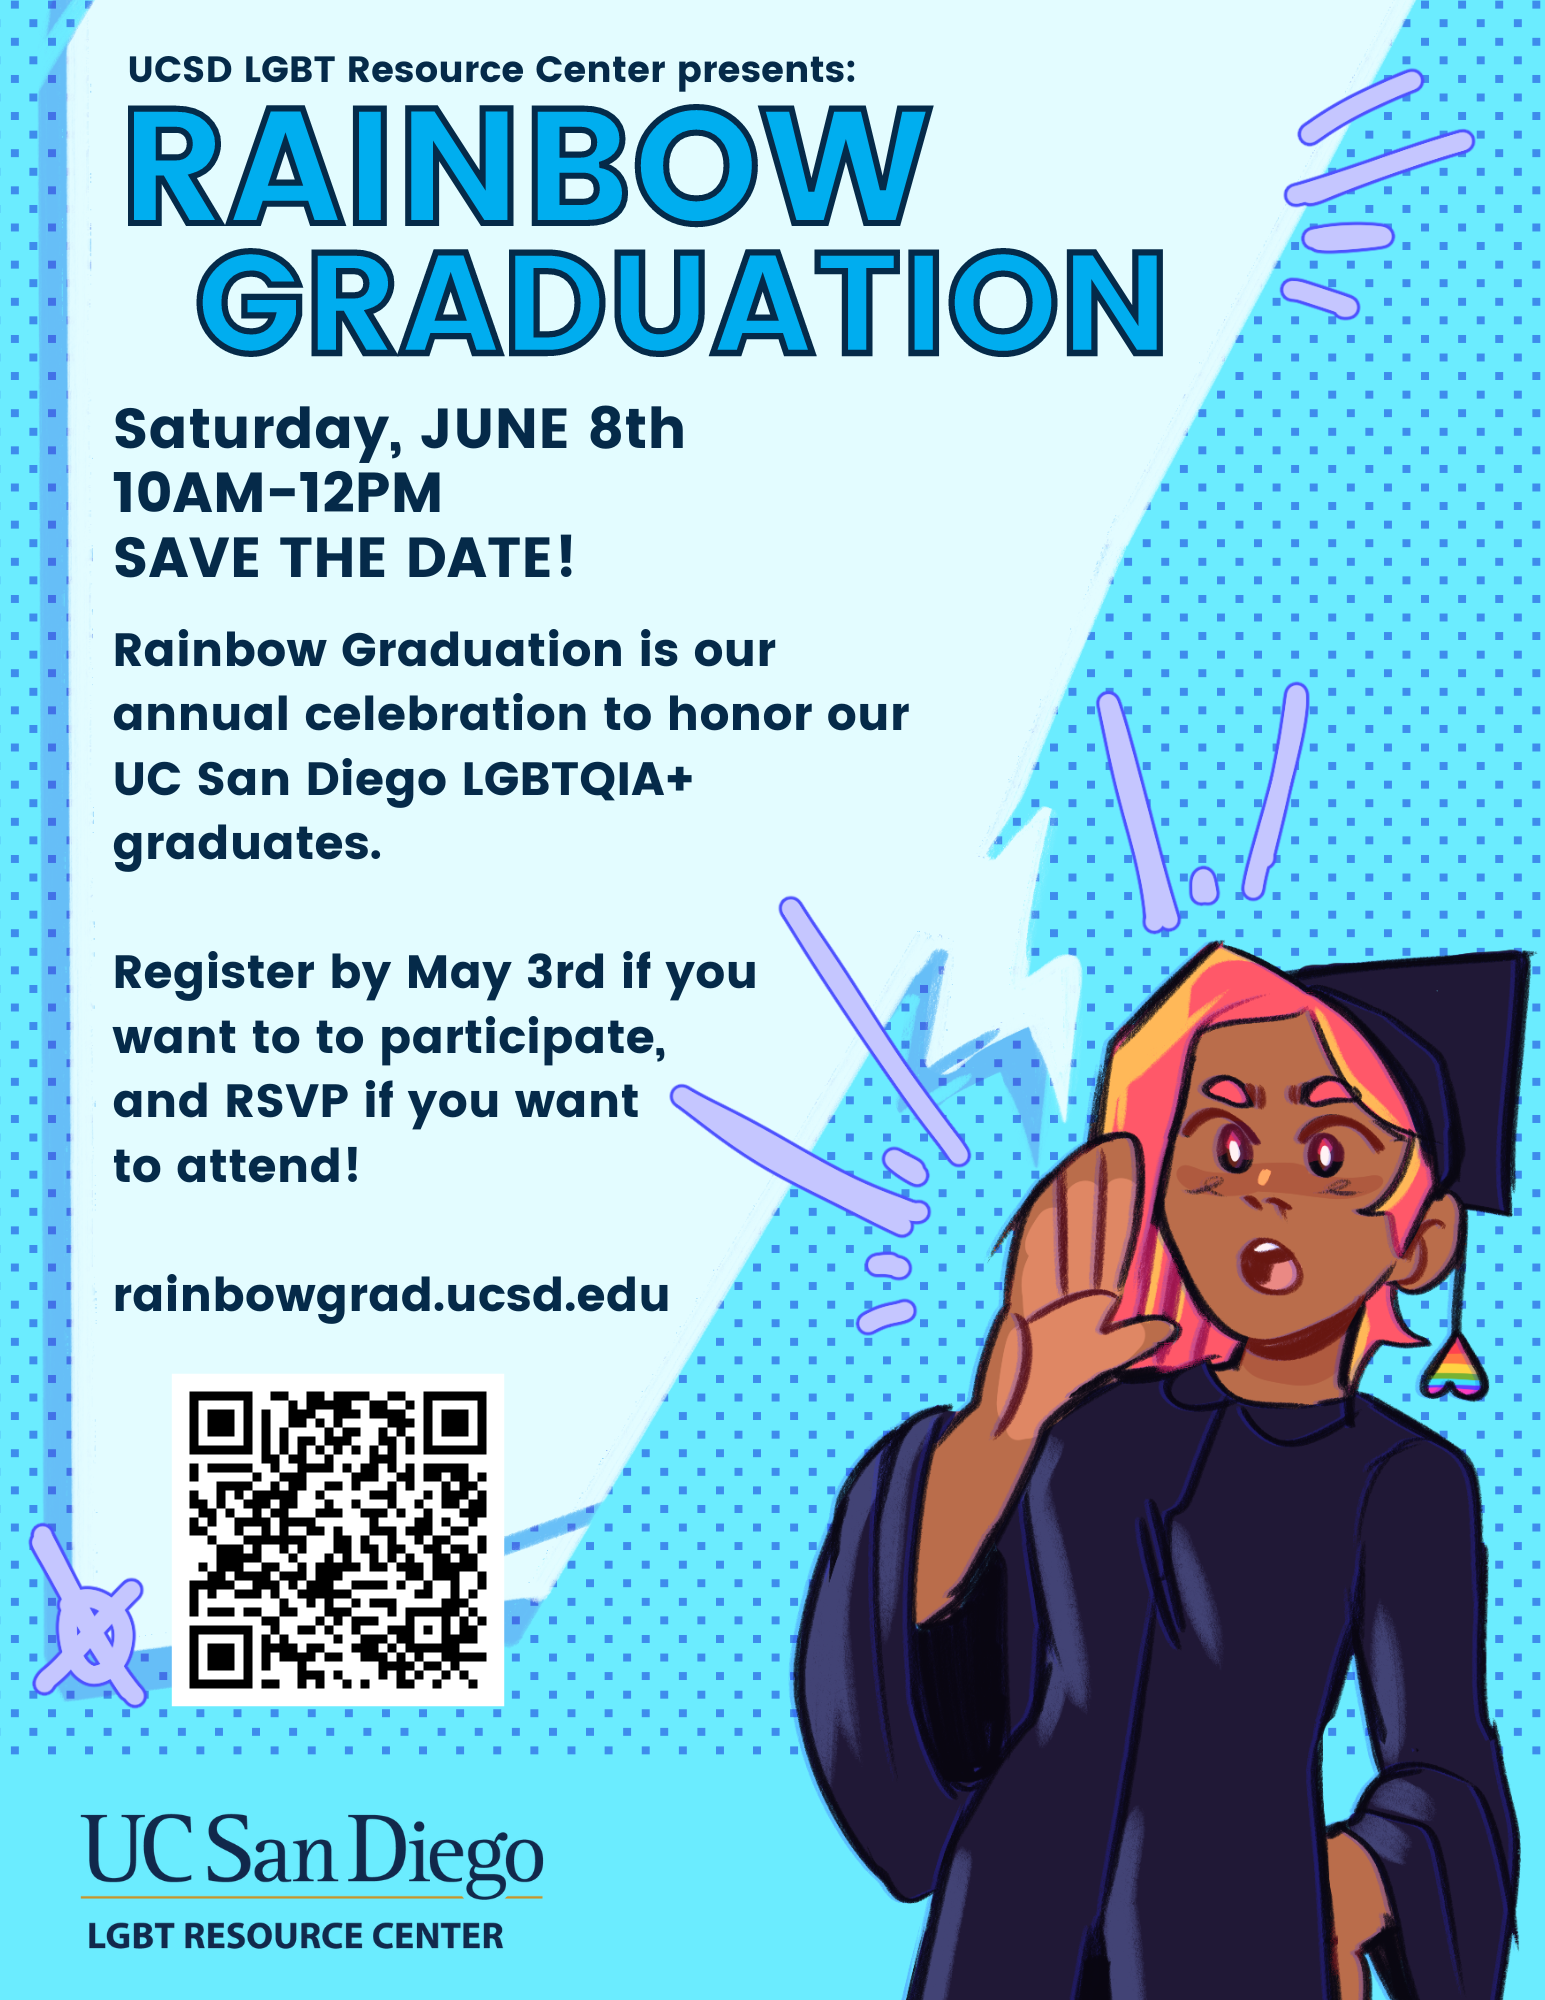 Advertisement for rainbow graduation, rainbowgrad.ucsd.edu